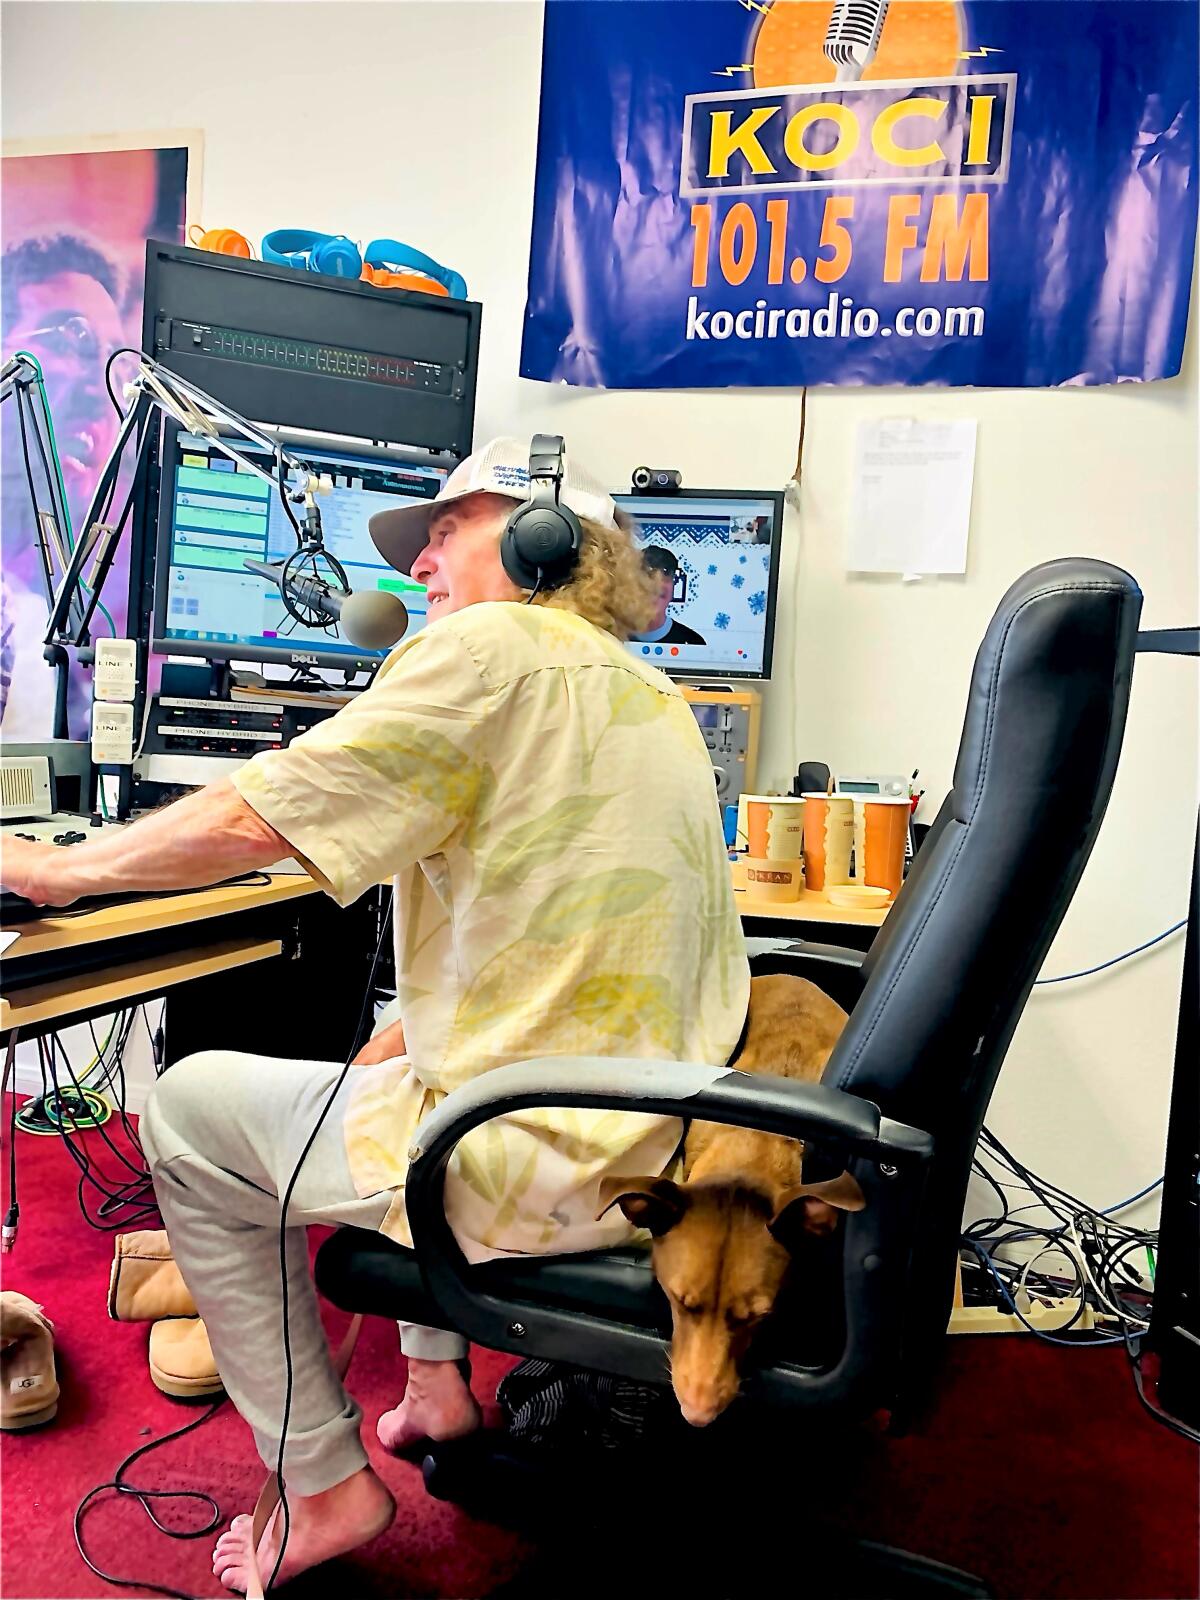 Newport Beach resident and radio host Jim "Poorman" Trenton hosts a morning show on KOCI-FM.